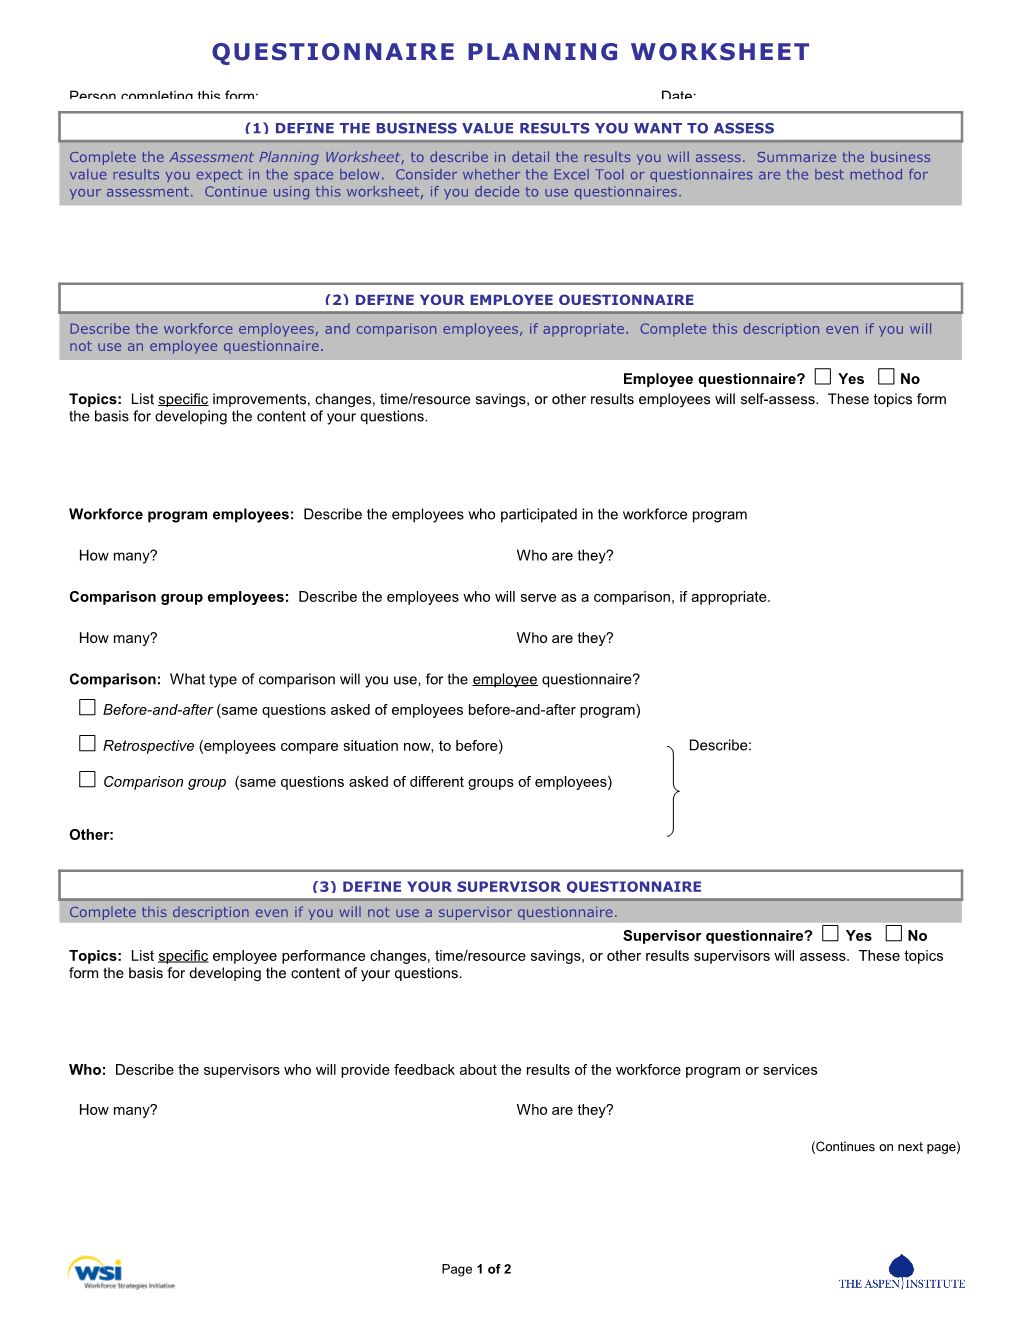 Questionnaire Planning Worksheet